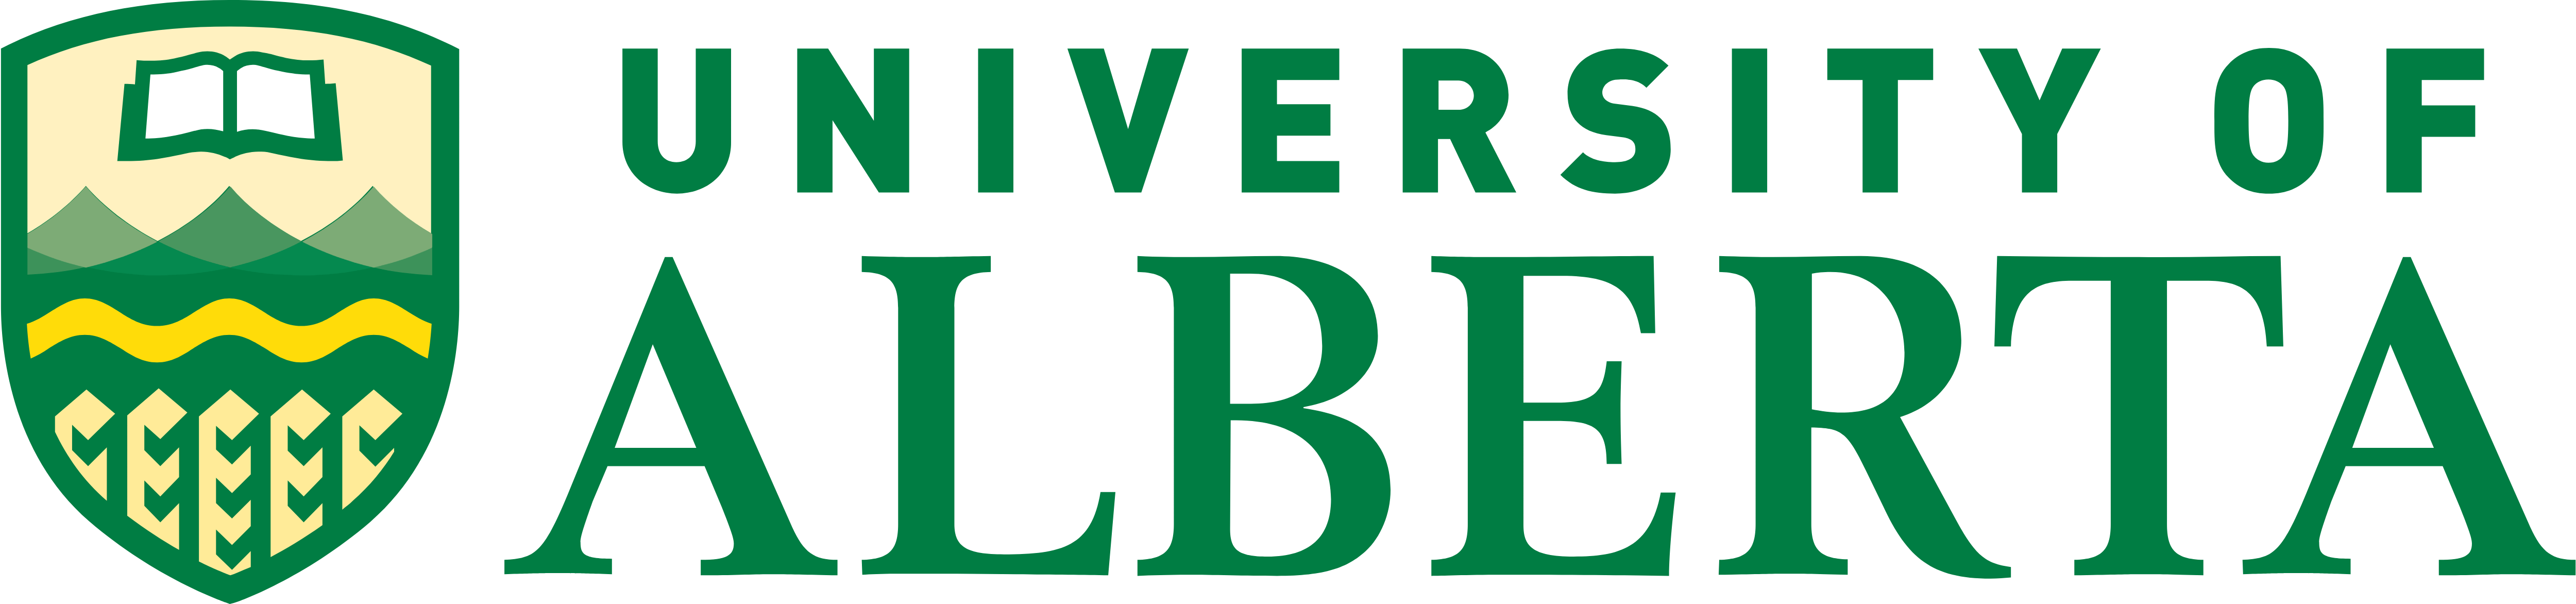 Alberta Logo - University of Alberta